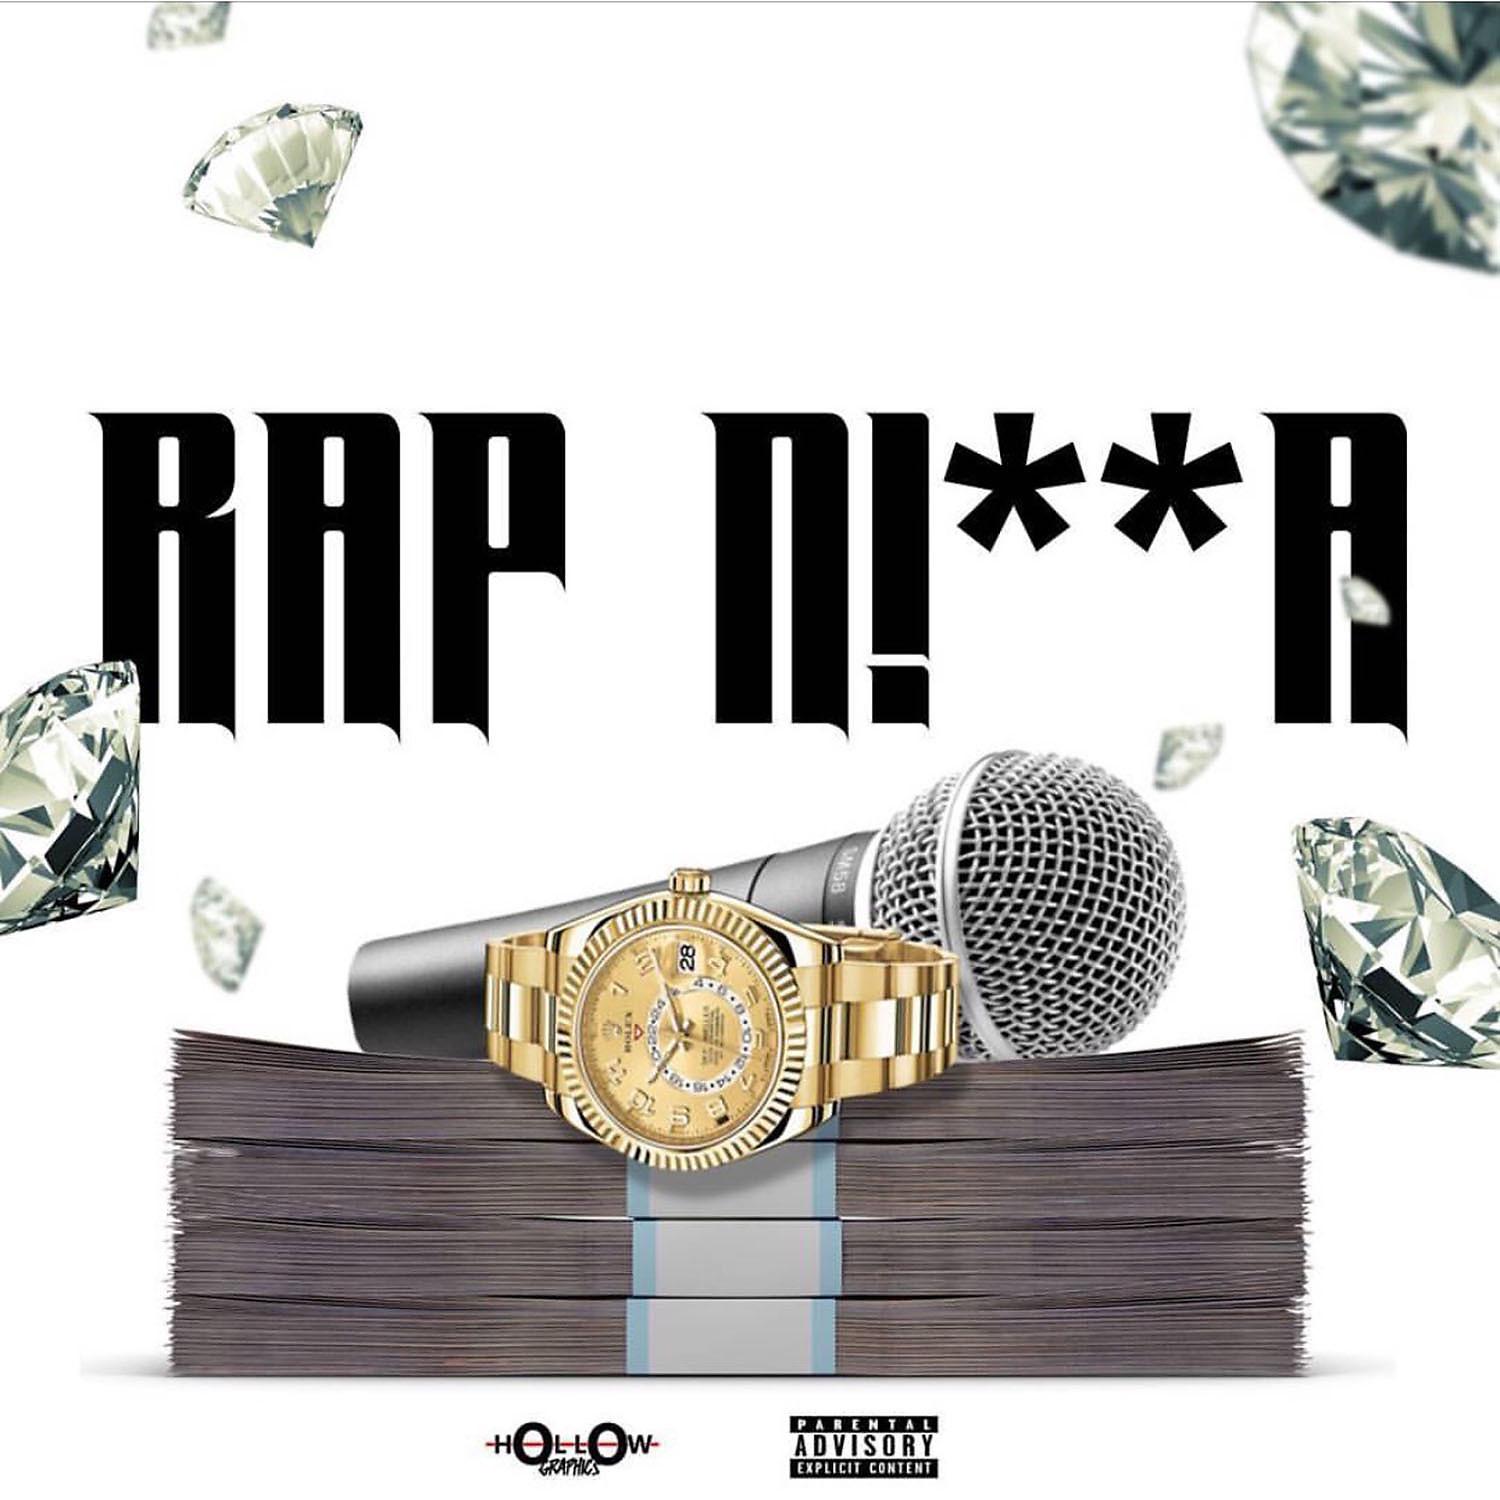 Постер альбома Rap Nigga